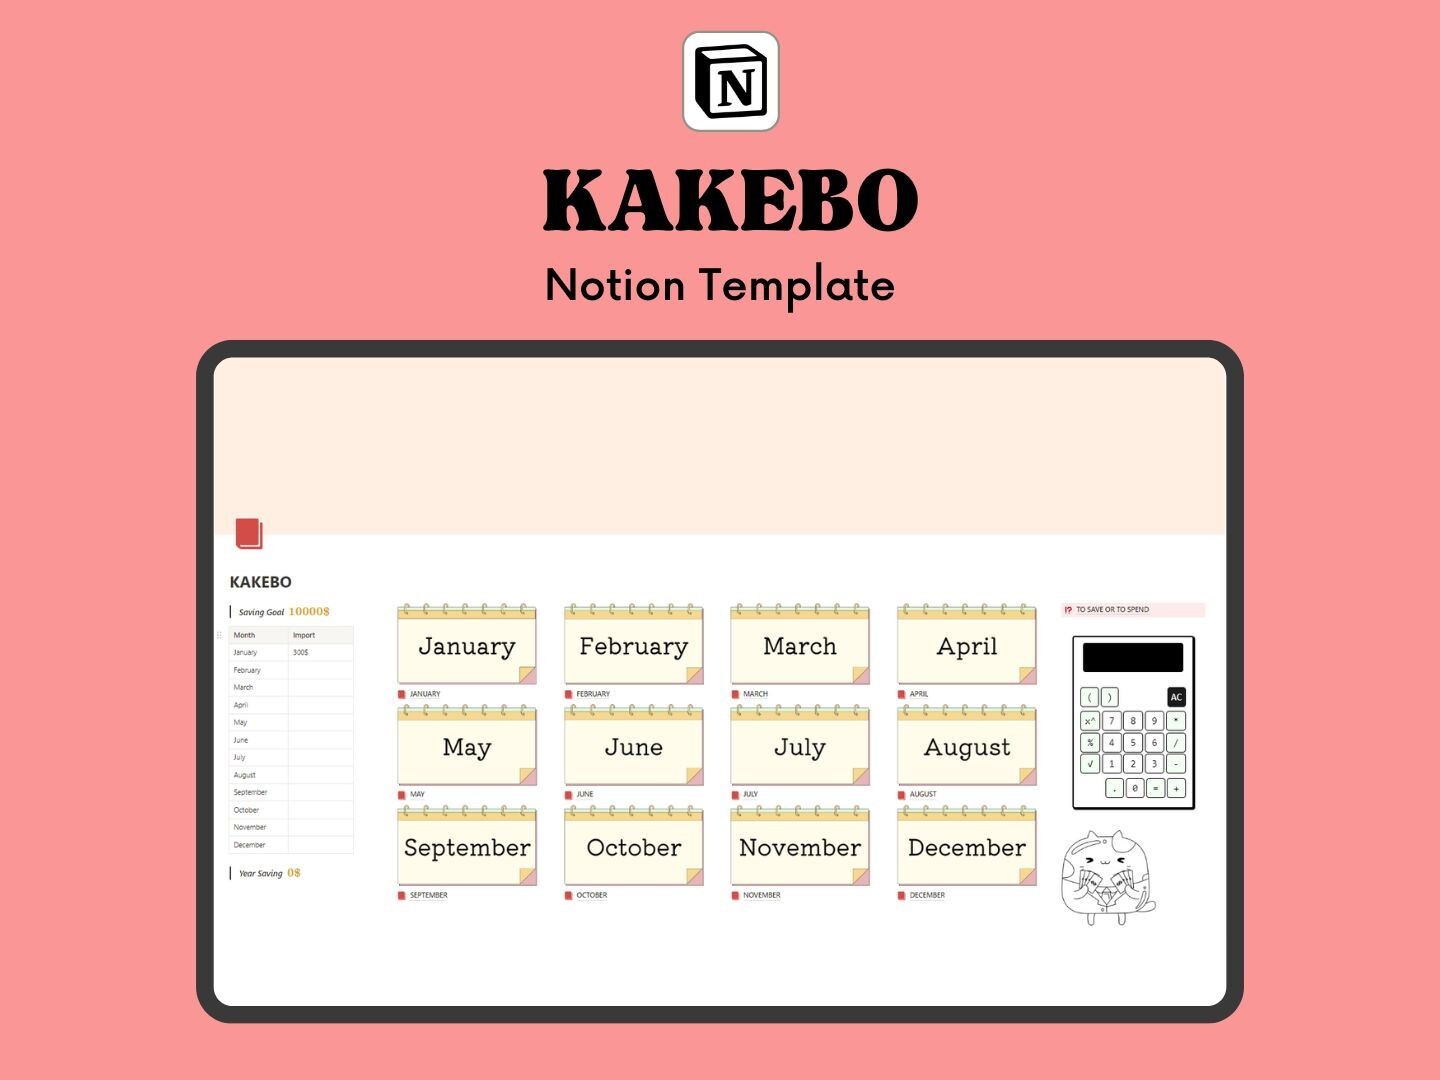 KAKEBO Notion template - Expense tracking - Gemma Nook's Ko-fi Shop